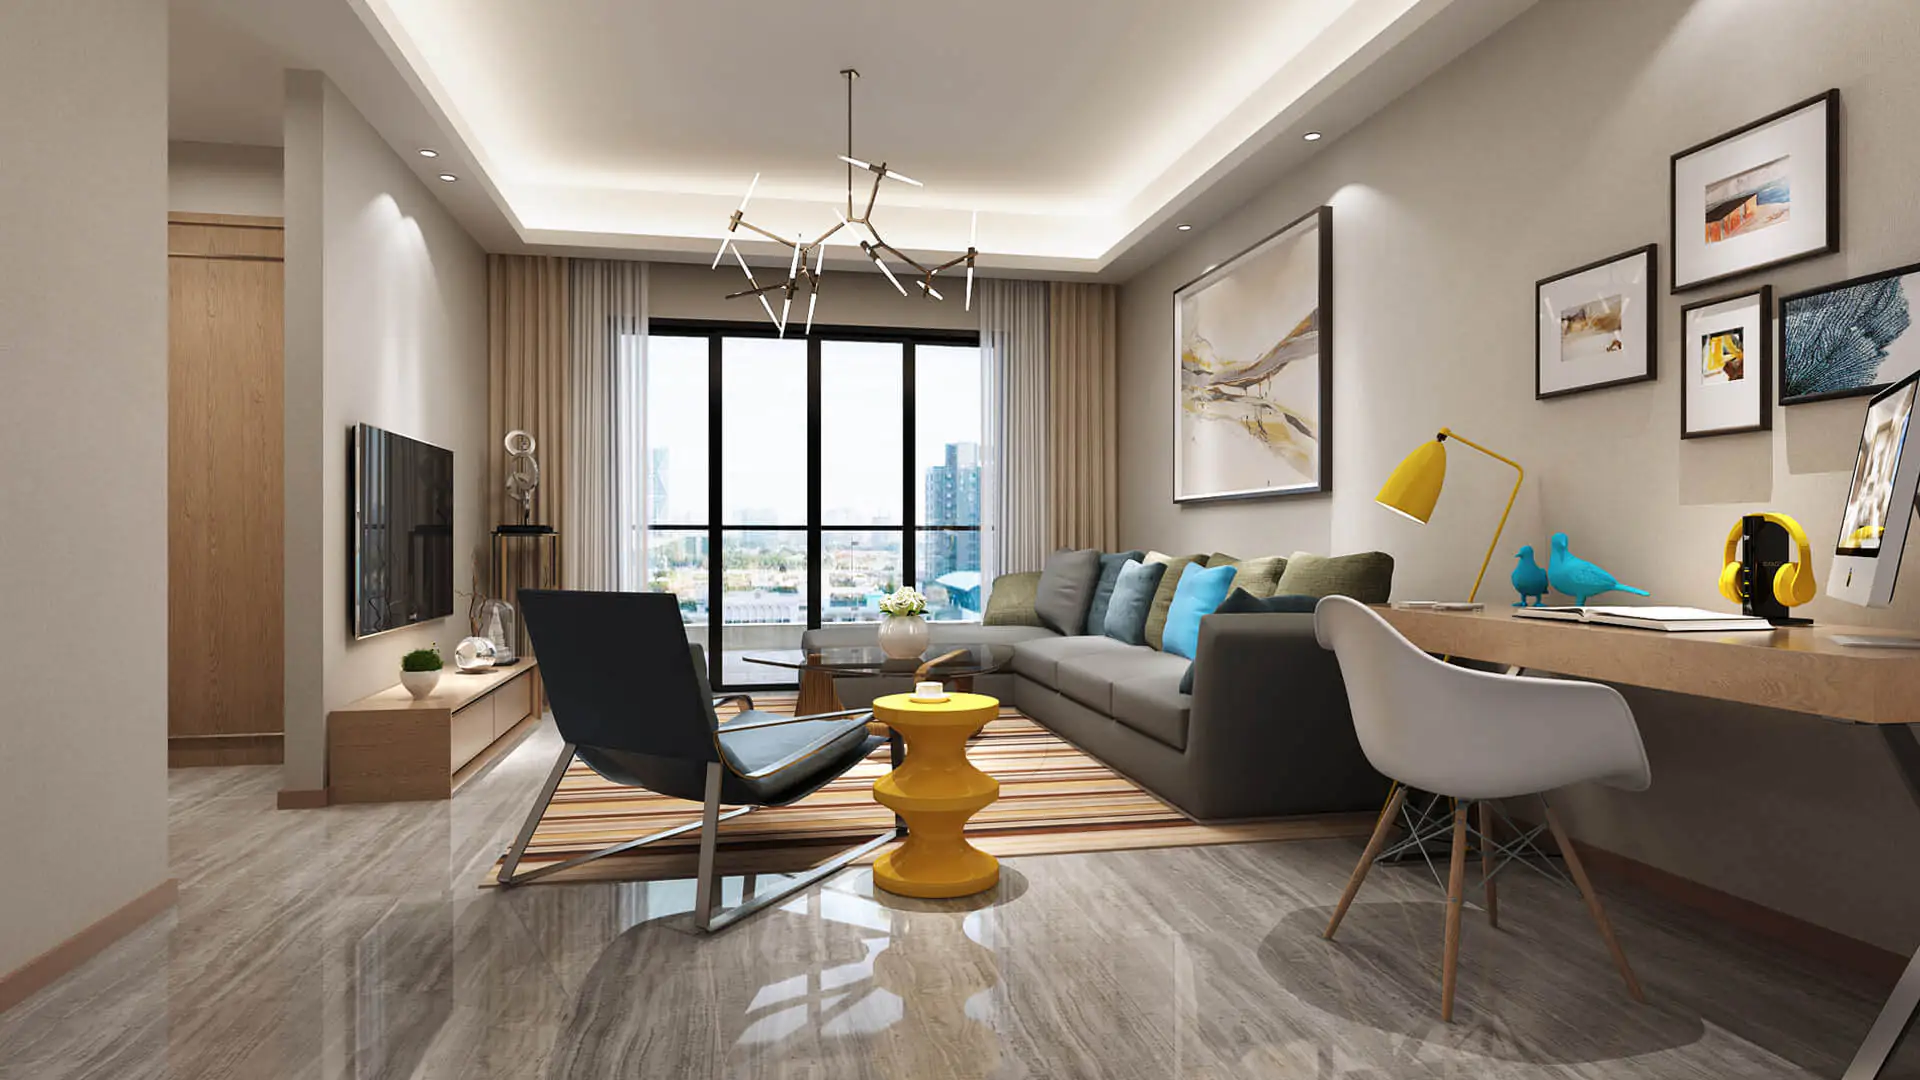 Living Room Interior Design Cost In Bangladesh